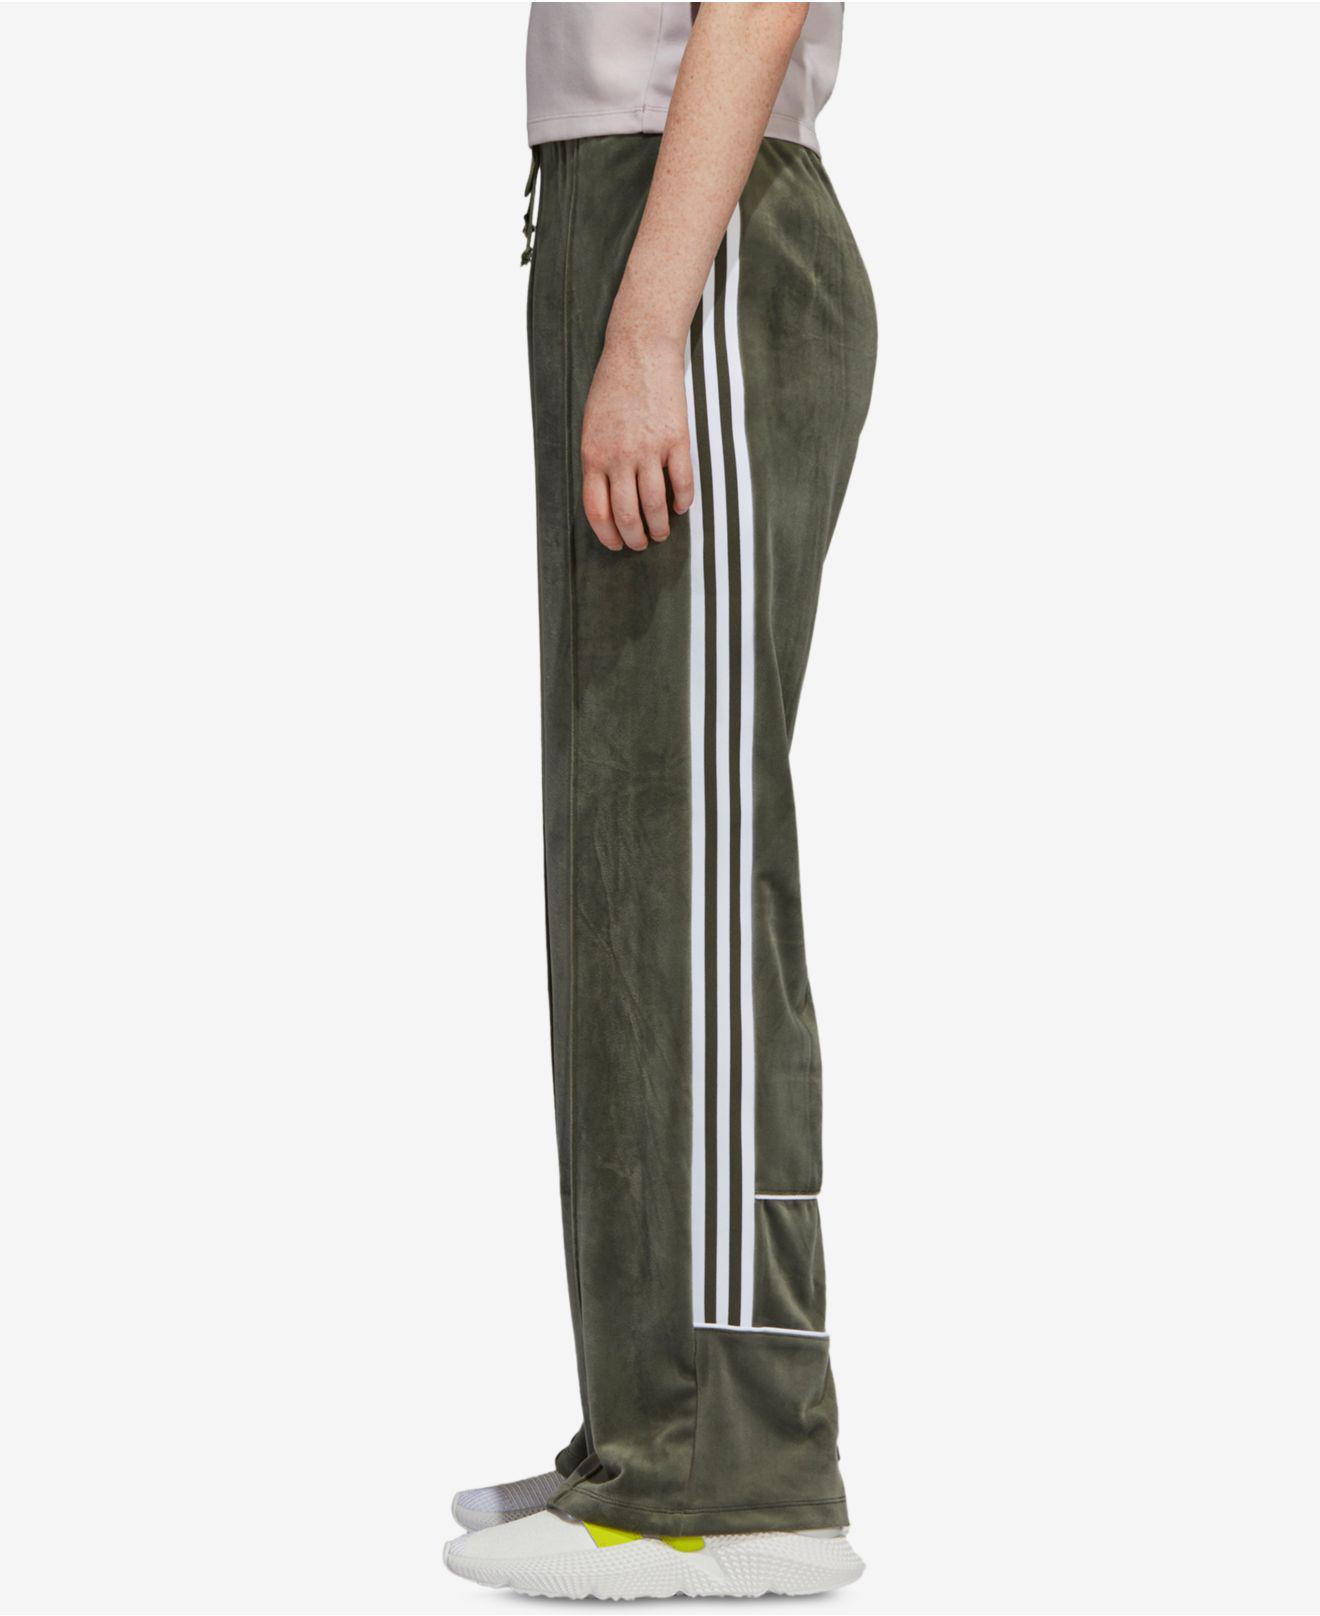 adidas Originals Velvet Three-stripe Track Pants in Olive Green (Green) |  Lyst